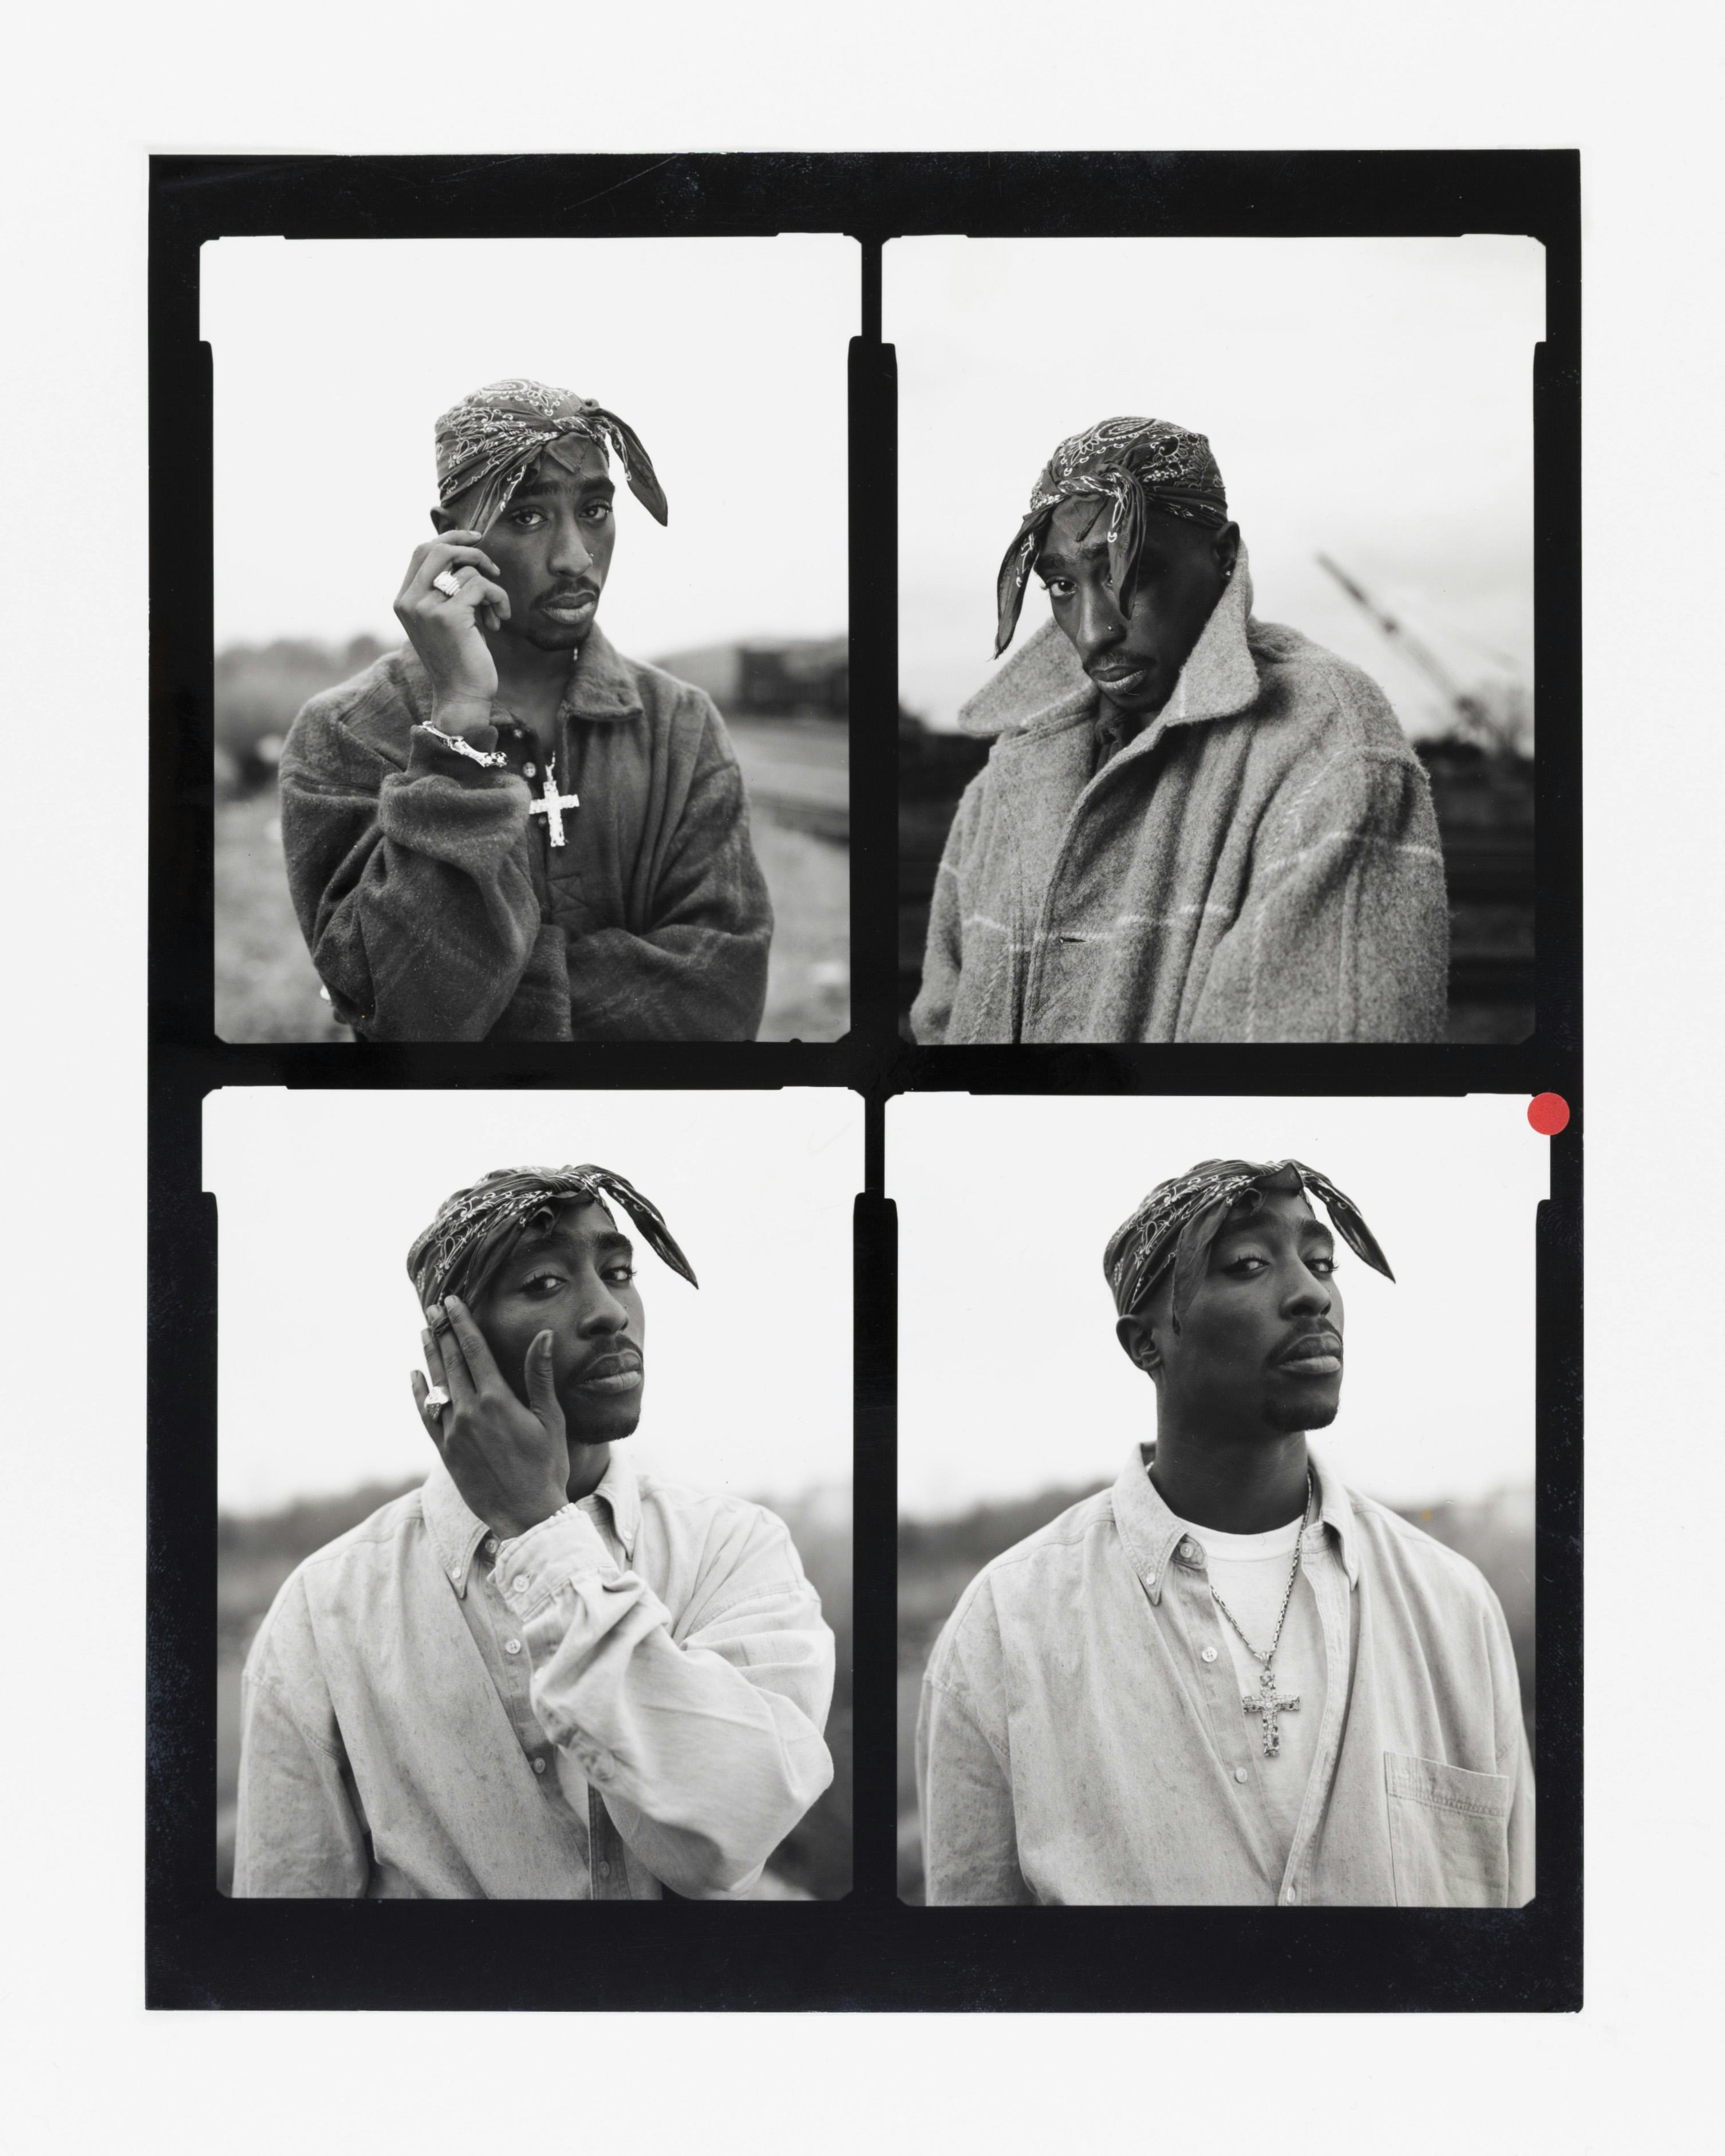 Tupac, Atlanta, GA 1993, contactsheet   Copyright Dana Lixenberg    Courtesy of the artist and GRIMM Amsterdam | London | New York